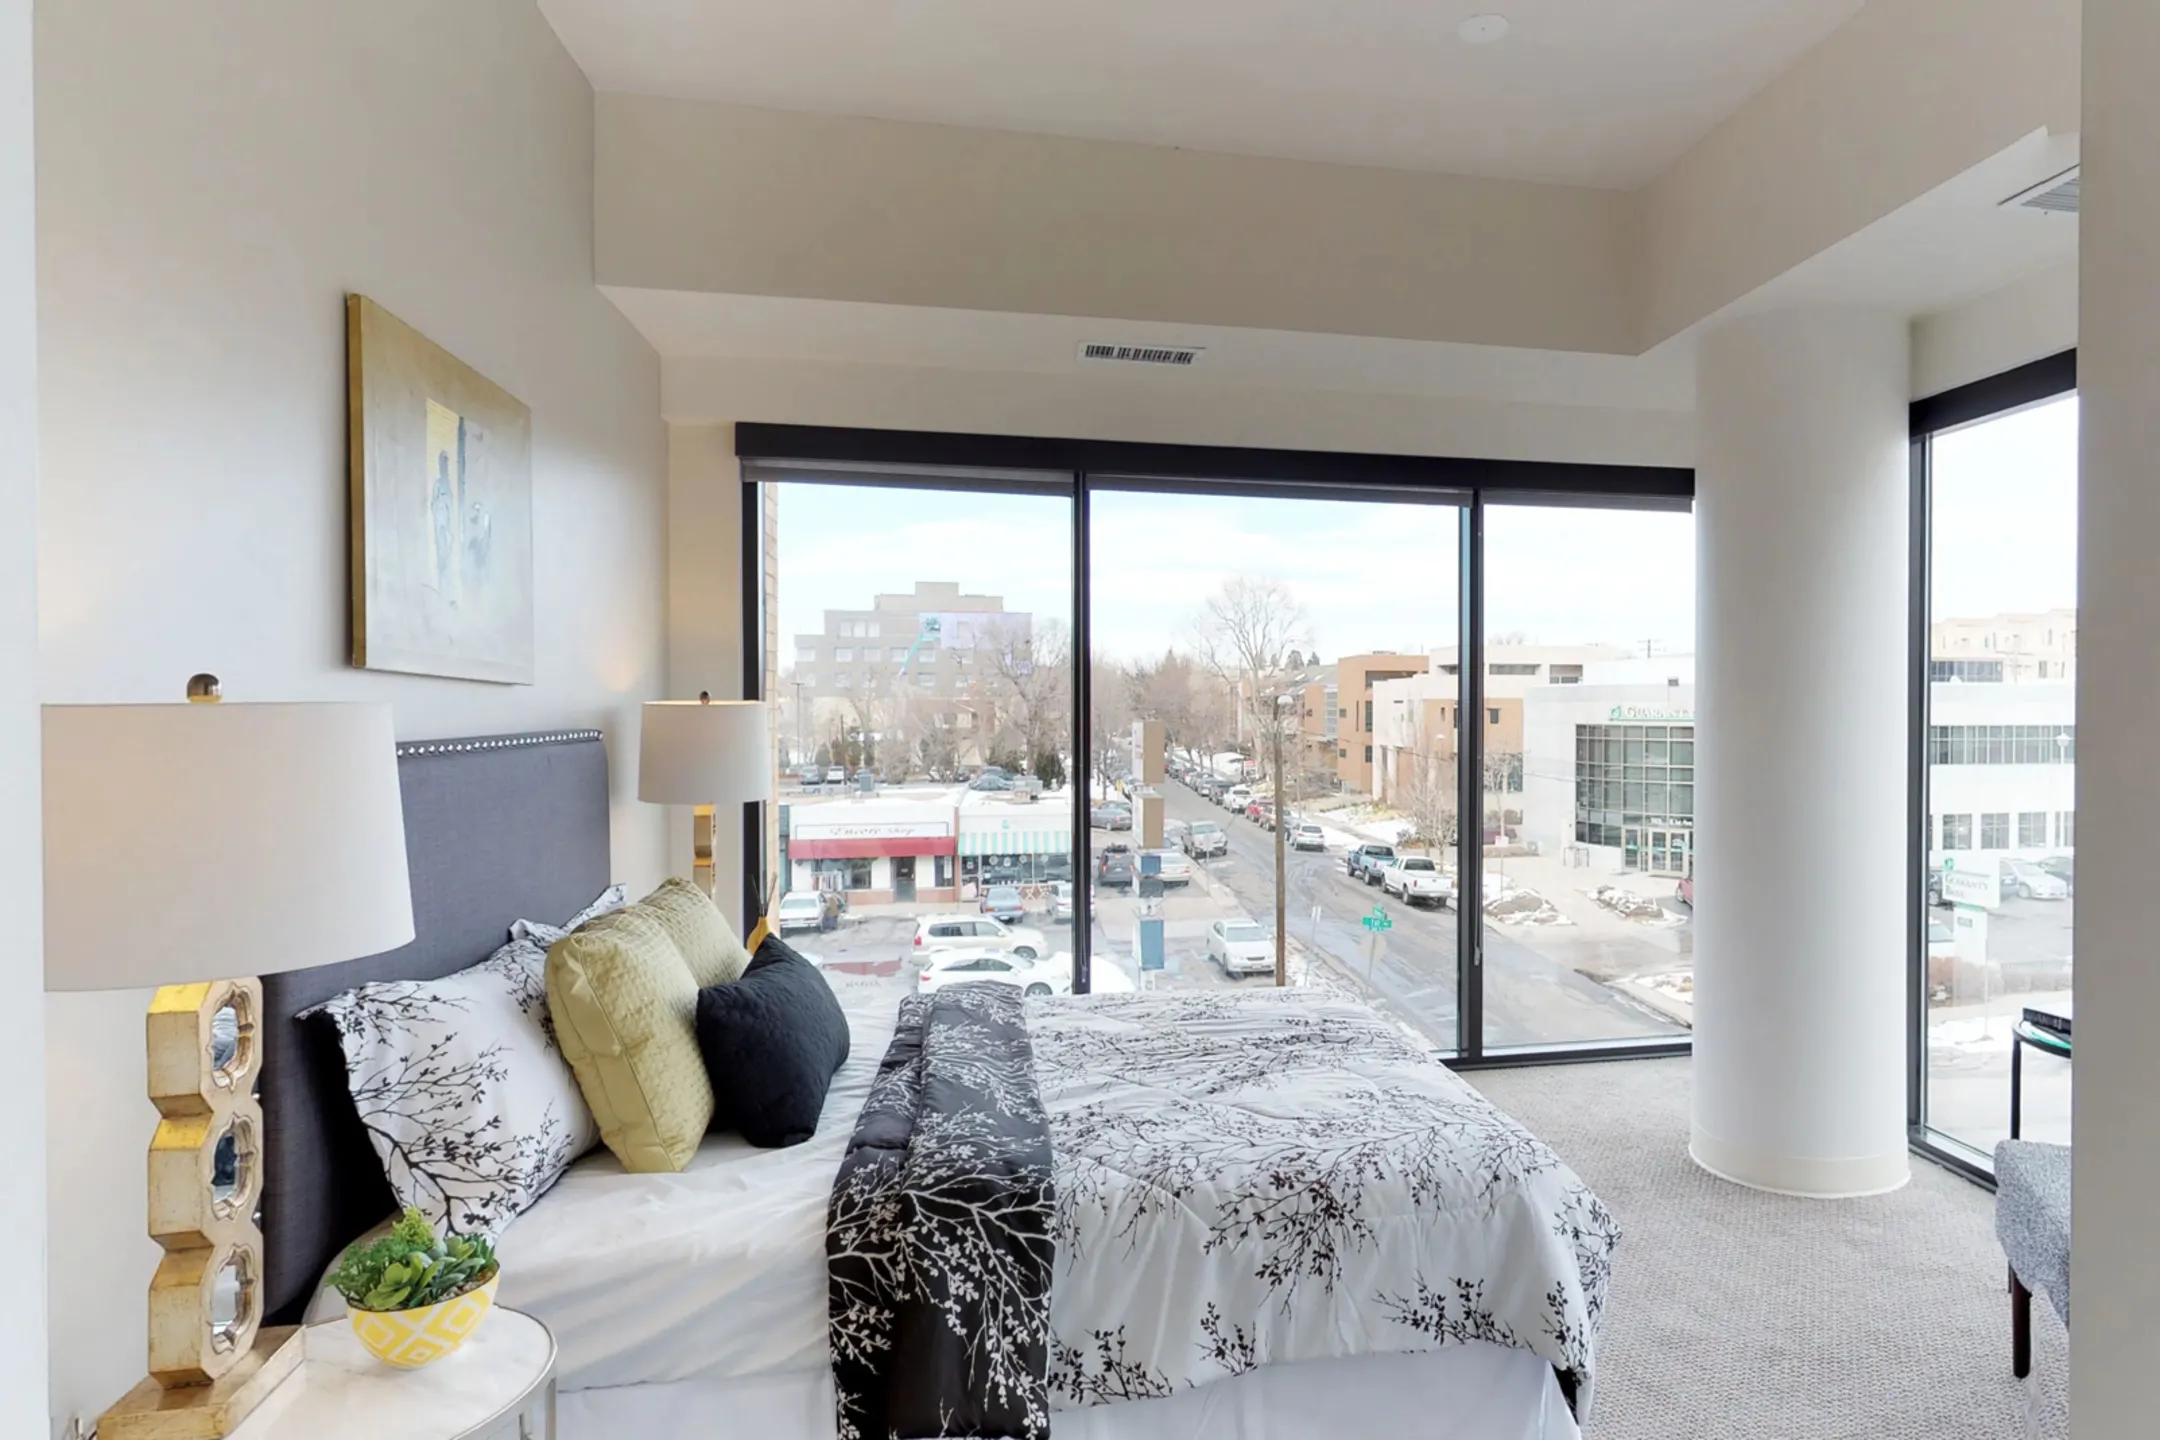 Bedroom - Steele Creek Apartments - Denver, CO